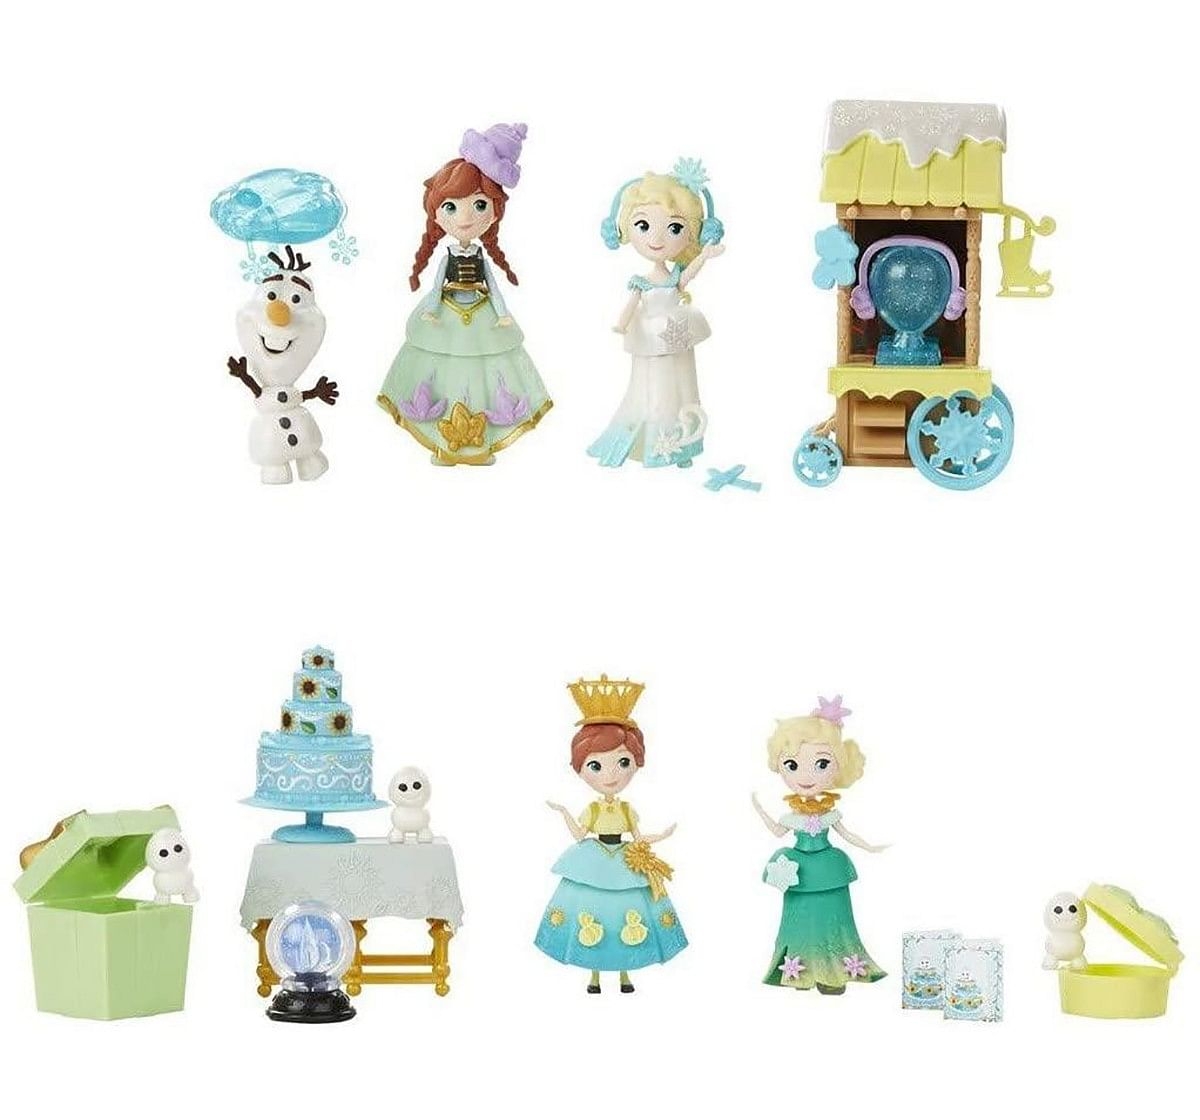 Disney Frozen Little Kingdom Frozen Fever Set Assorted Dolls & Accessories for Girls age 4Y+ 